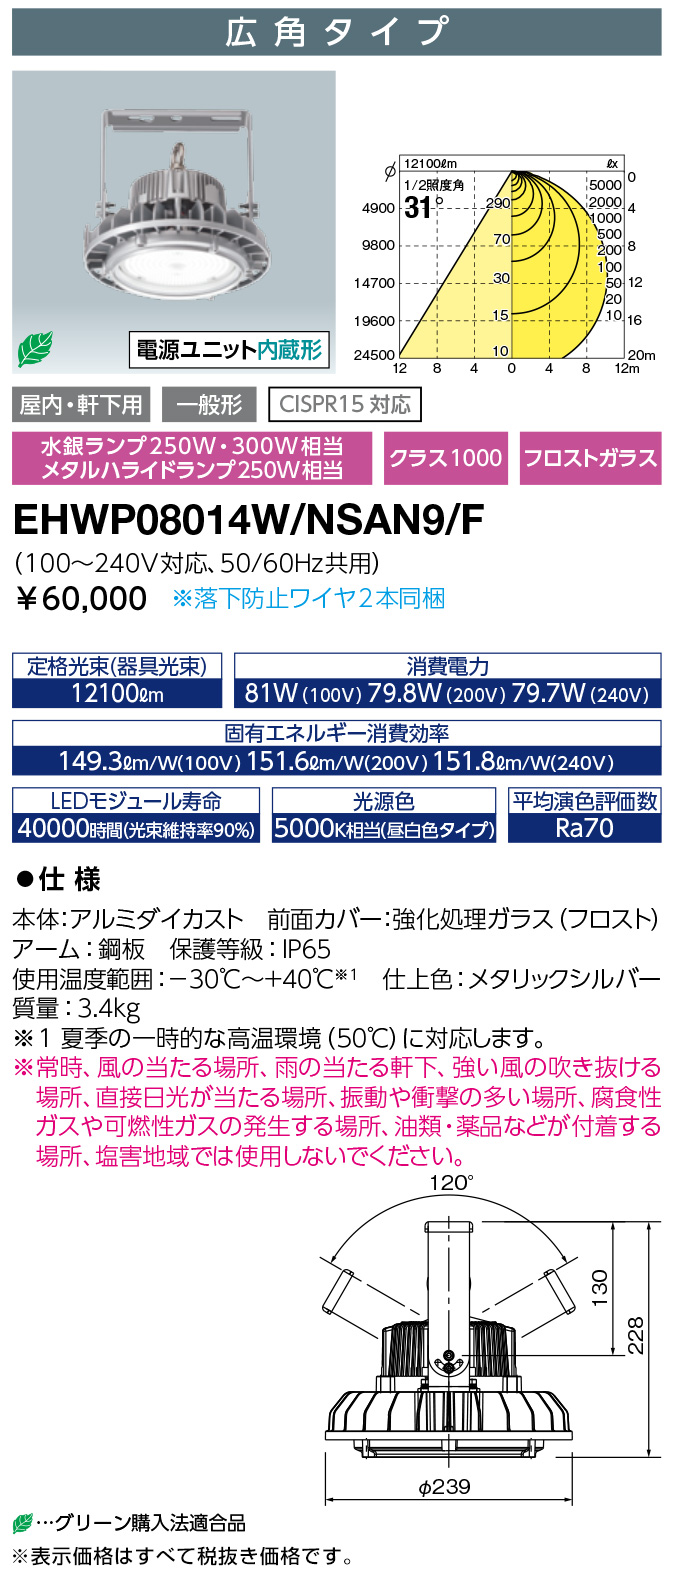 EHWP08014W-NSAN9-F